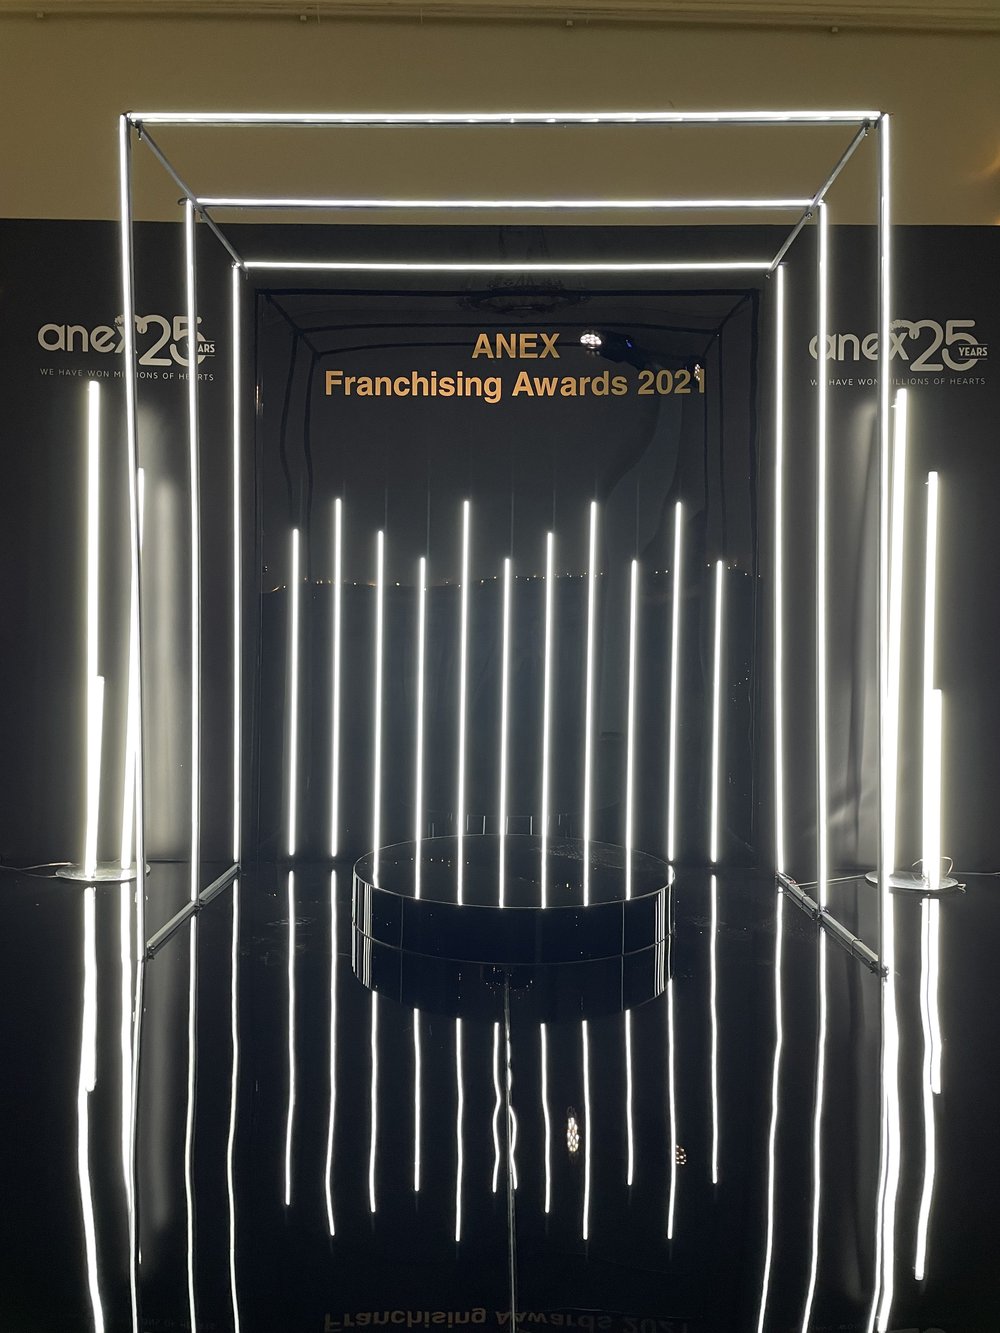 Anex Franchising Awards